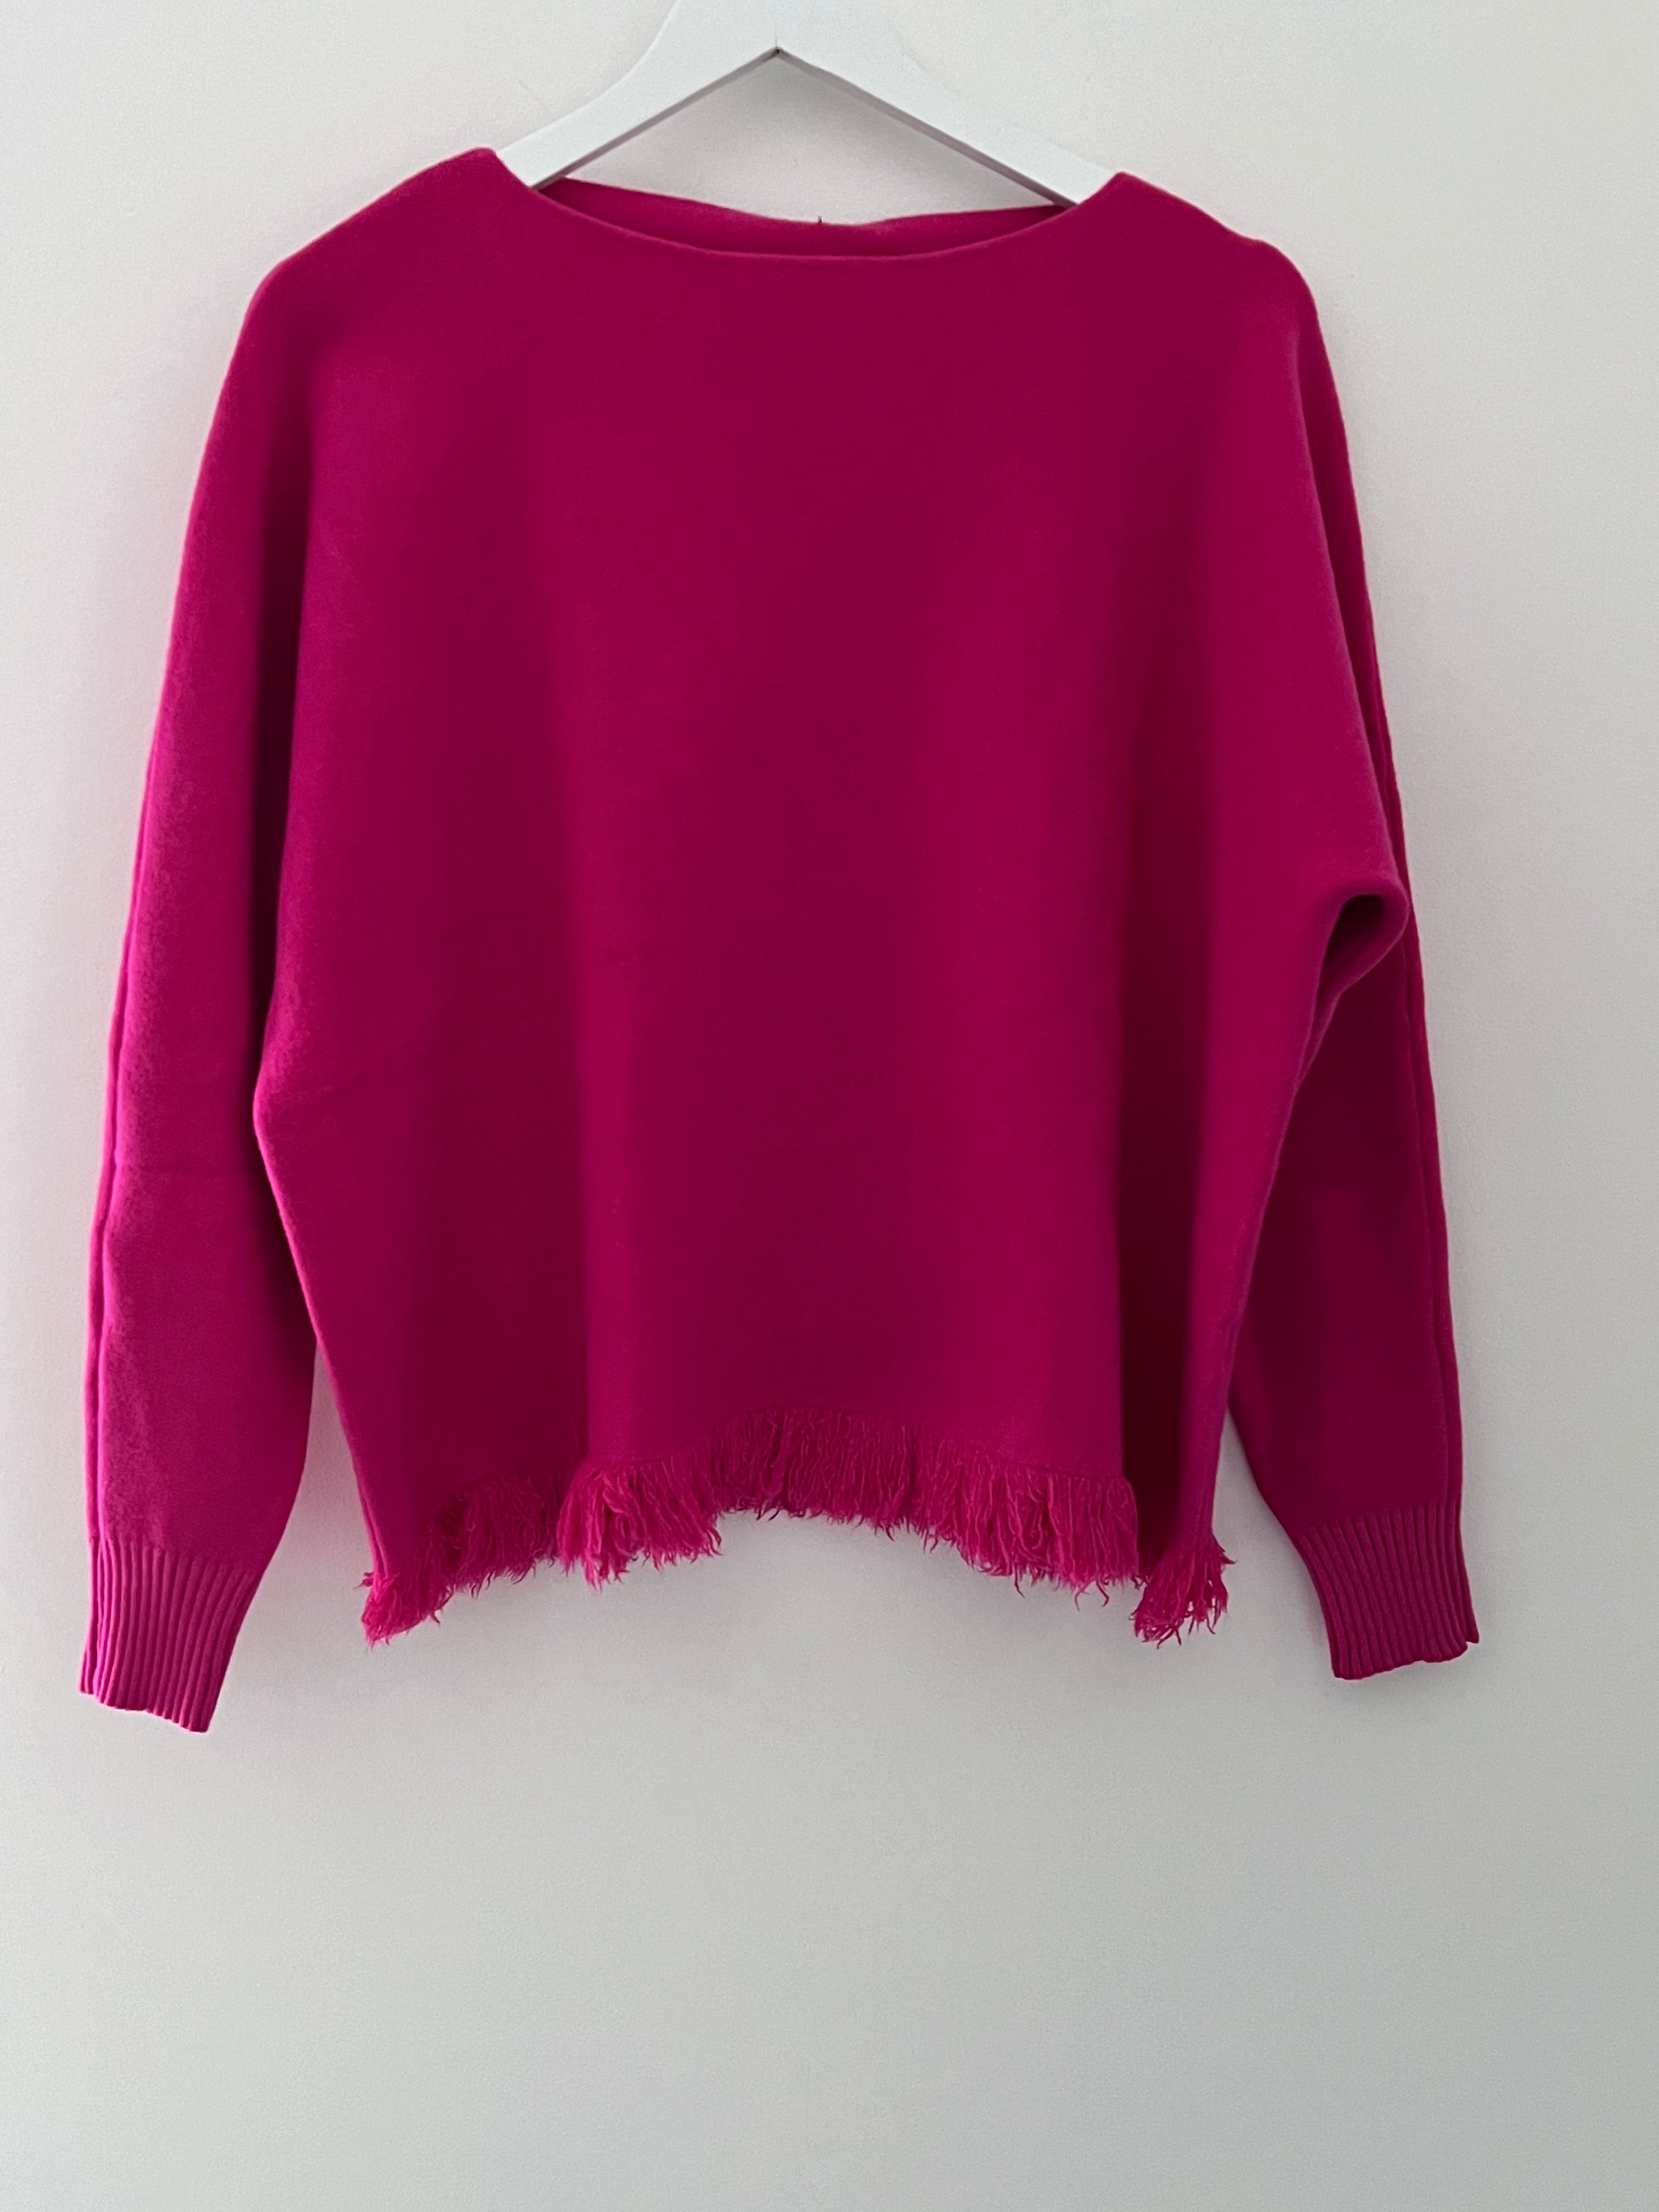 Fringe Sweater in Fuchsia